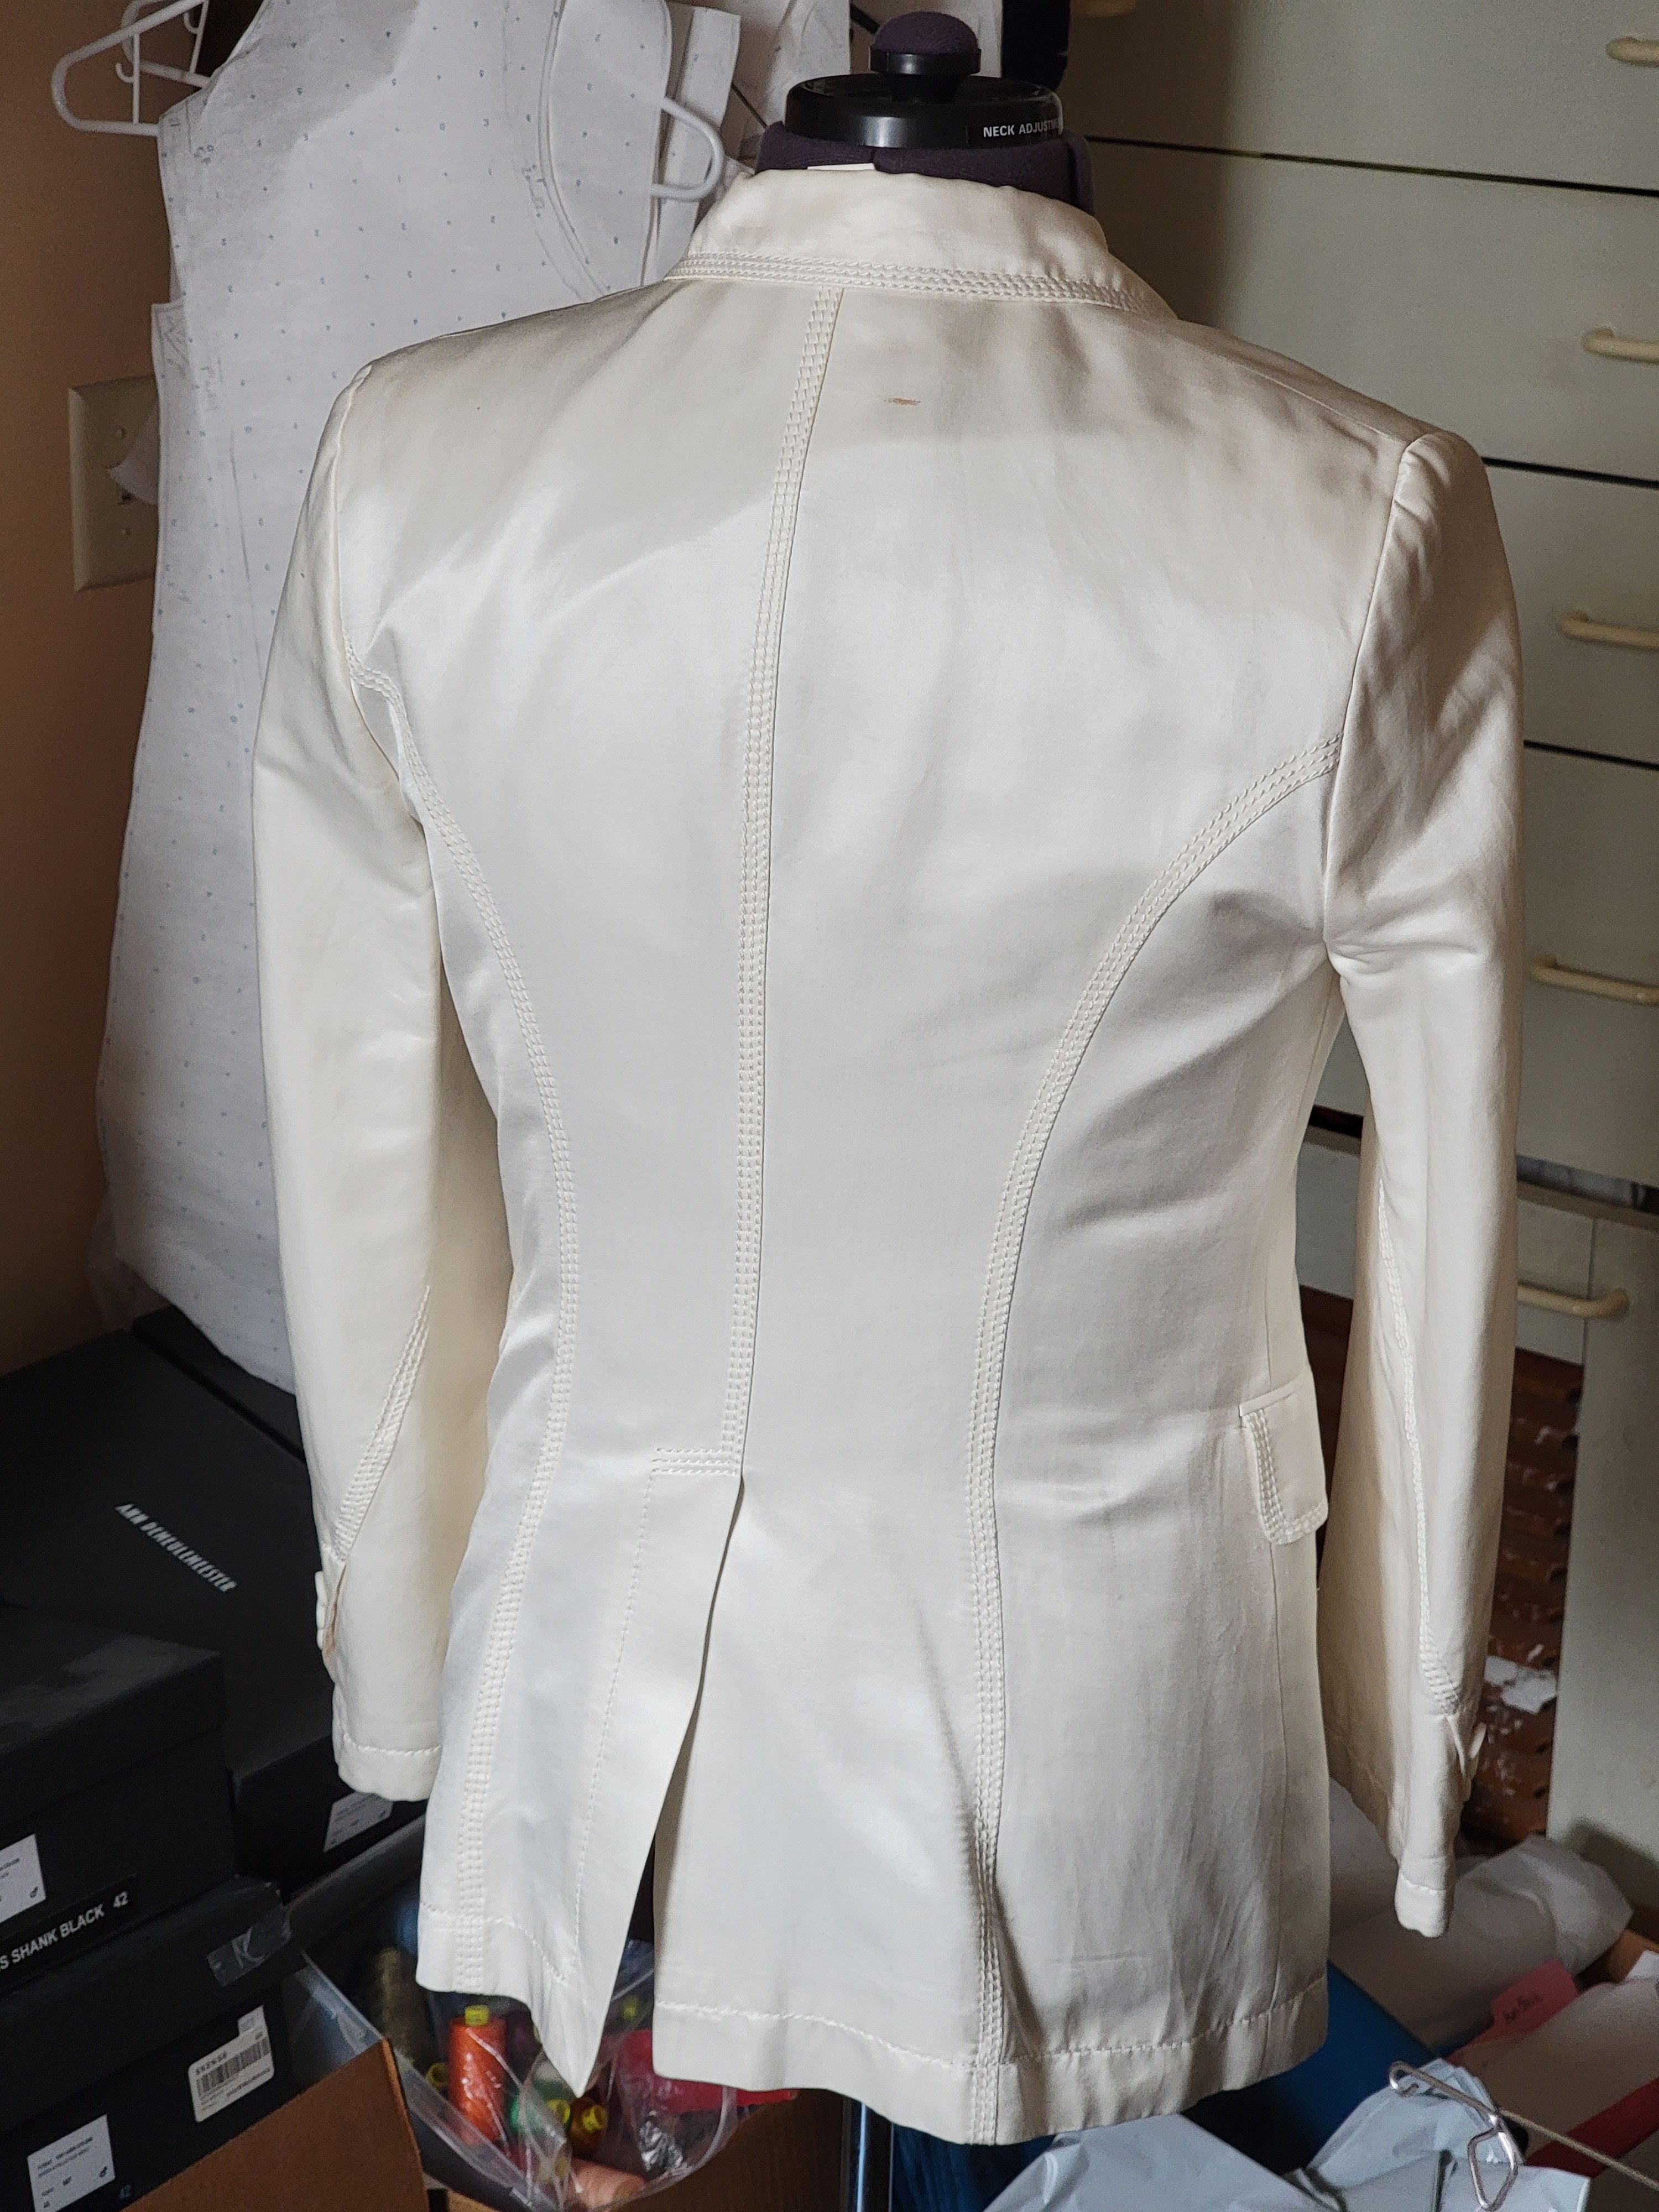 Ann Demeulemeester SS 2011 Ann D white silk cotton blazer size S Size 38R - 2 Preview